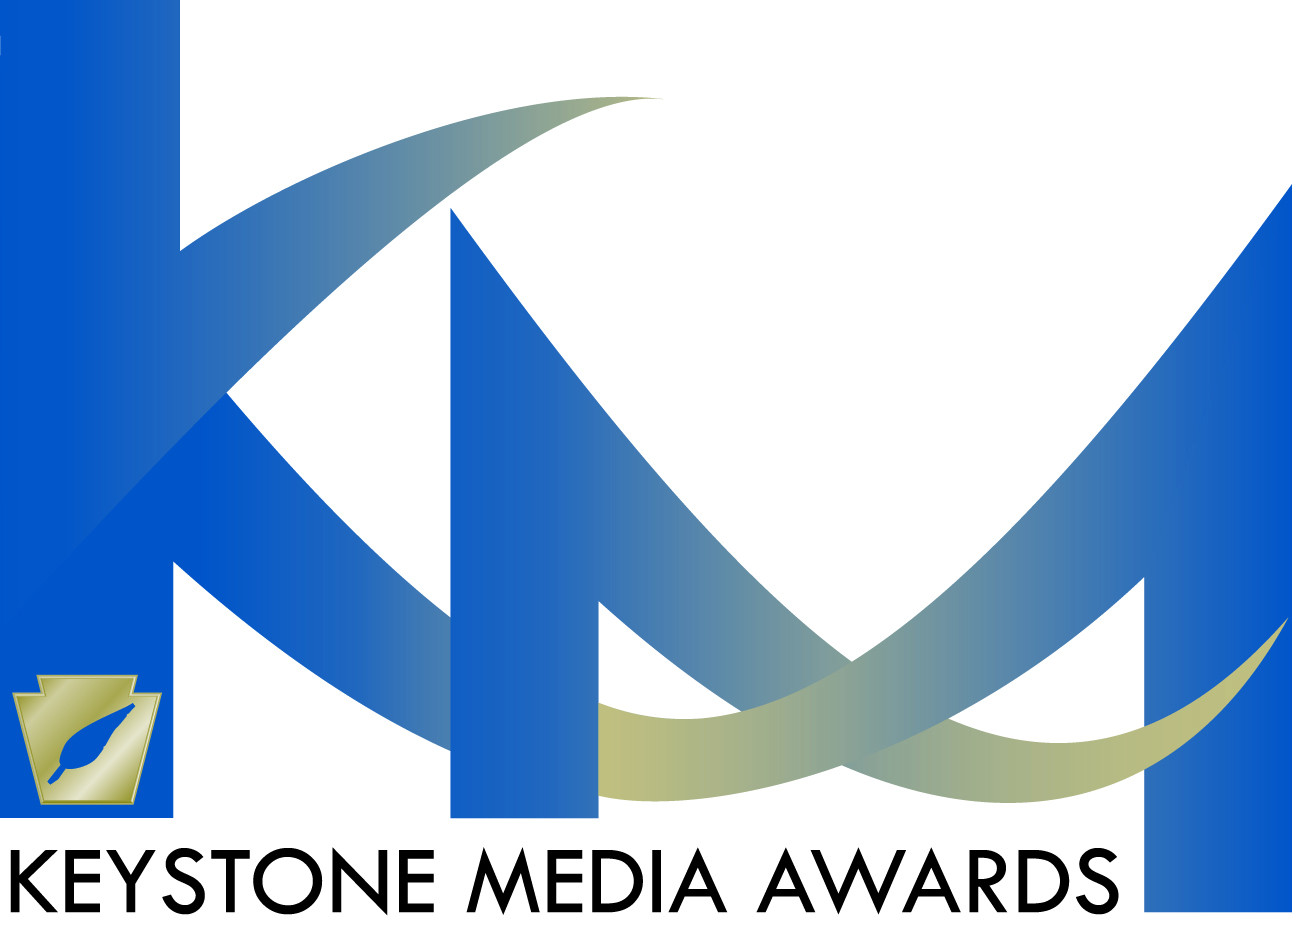 Keystone Media Awards logo